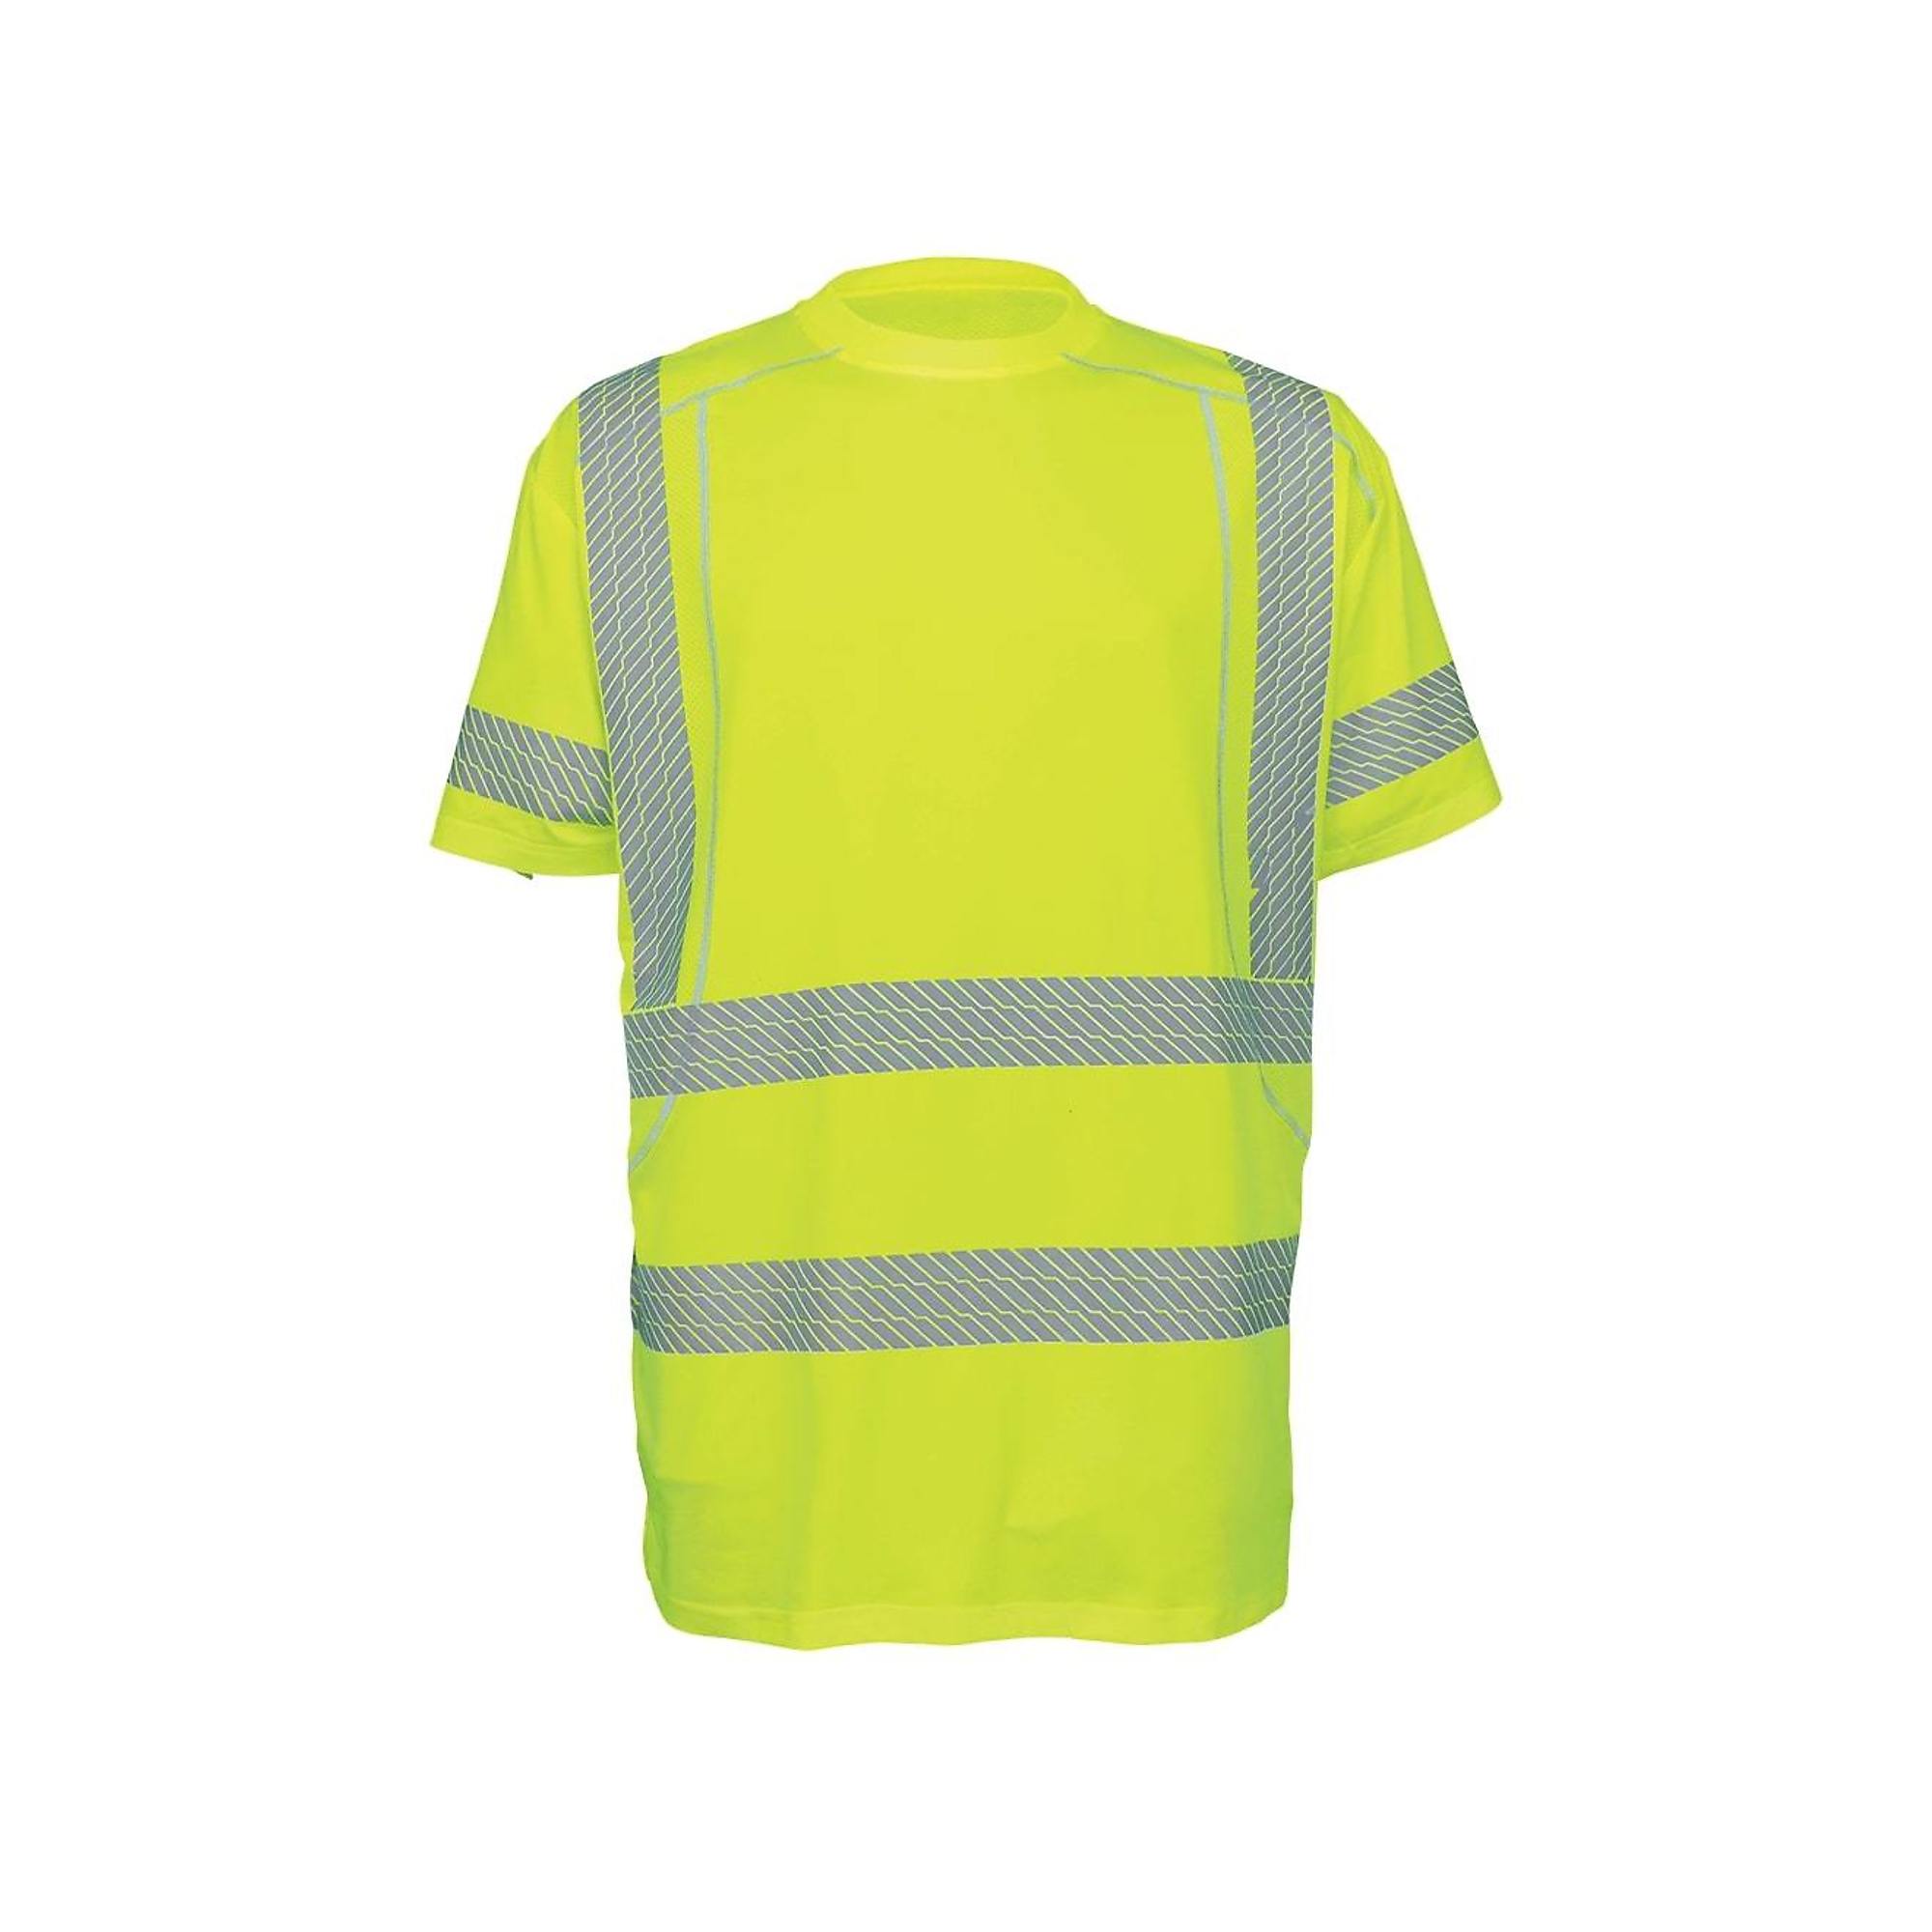 FrogWear, HV Yellow/Green, Class 3 Self-Wicking, Athletic Shirt, Size L, Model GLO-205-L